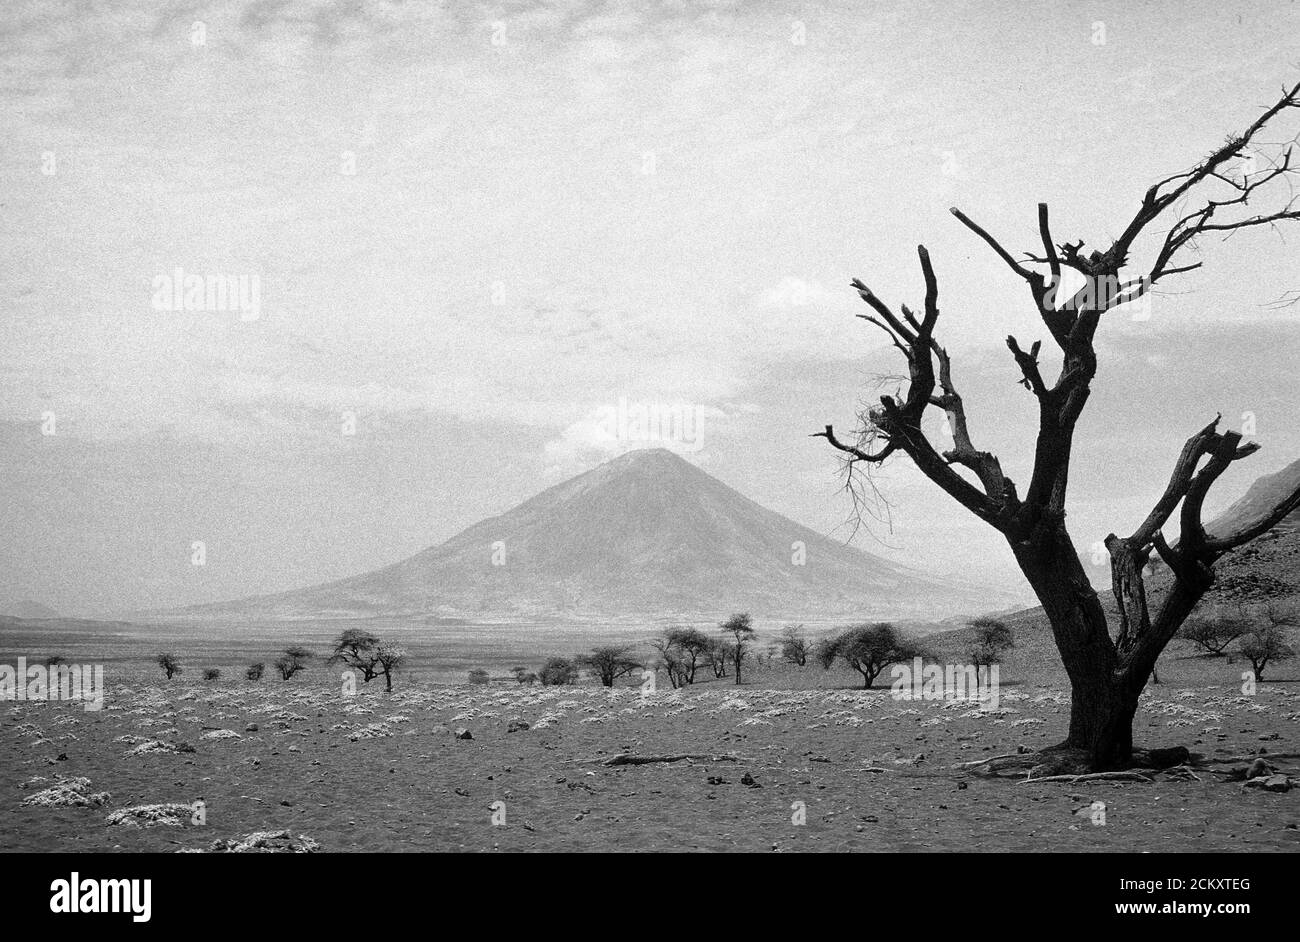 Monochrome image of Ol Doinyo Lengai, an active volcano in the Great Rift Valley, Tanzania. Stock Photo